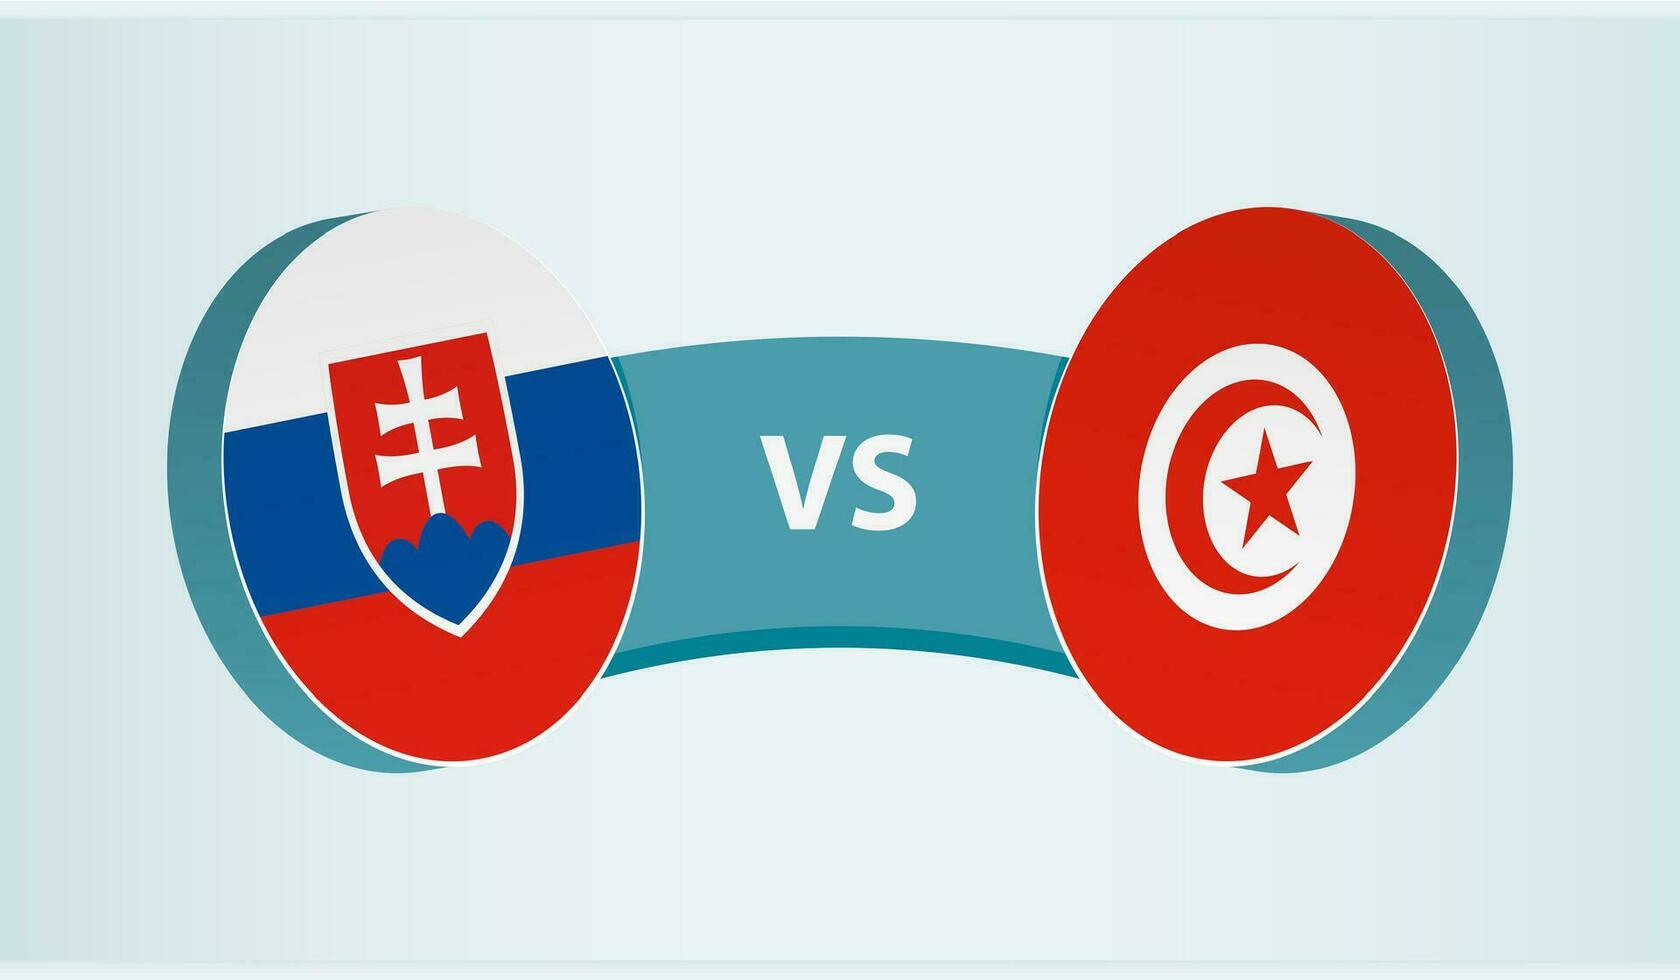 Slovakia versus Tunisia, team sports competition concept. vector